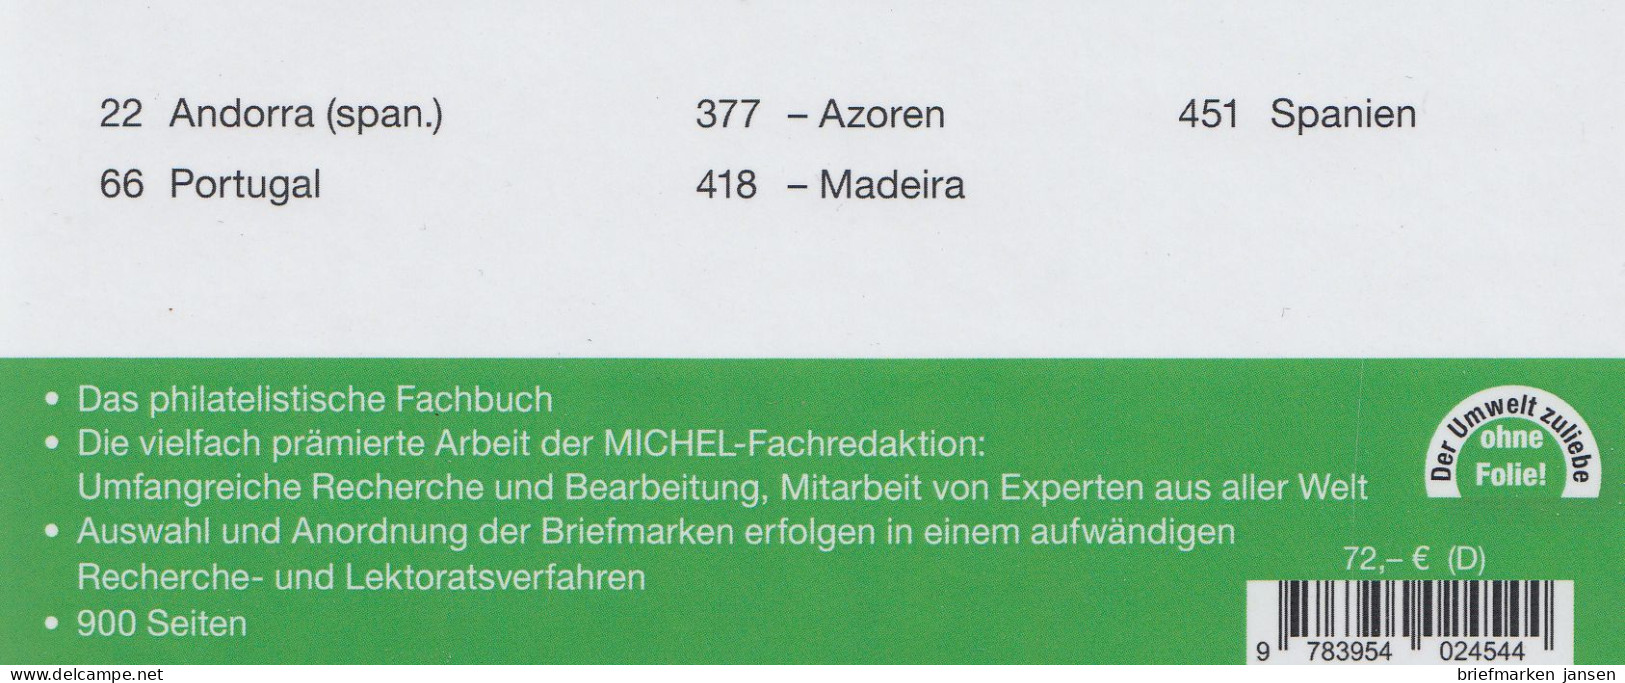 Michel Europa Katalog Band 4 - Iberische Halbinsel 2023, 108. Auflage - Austria